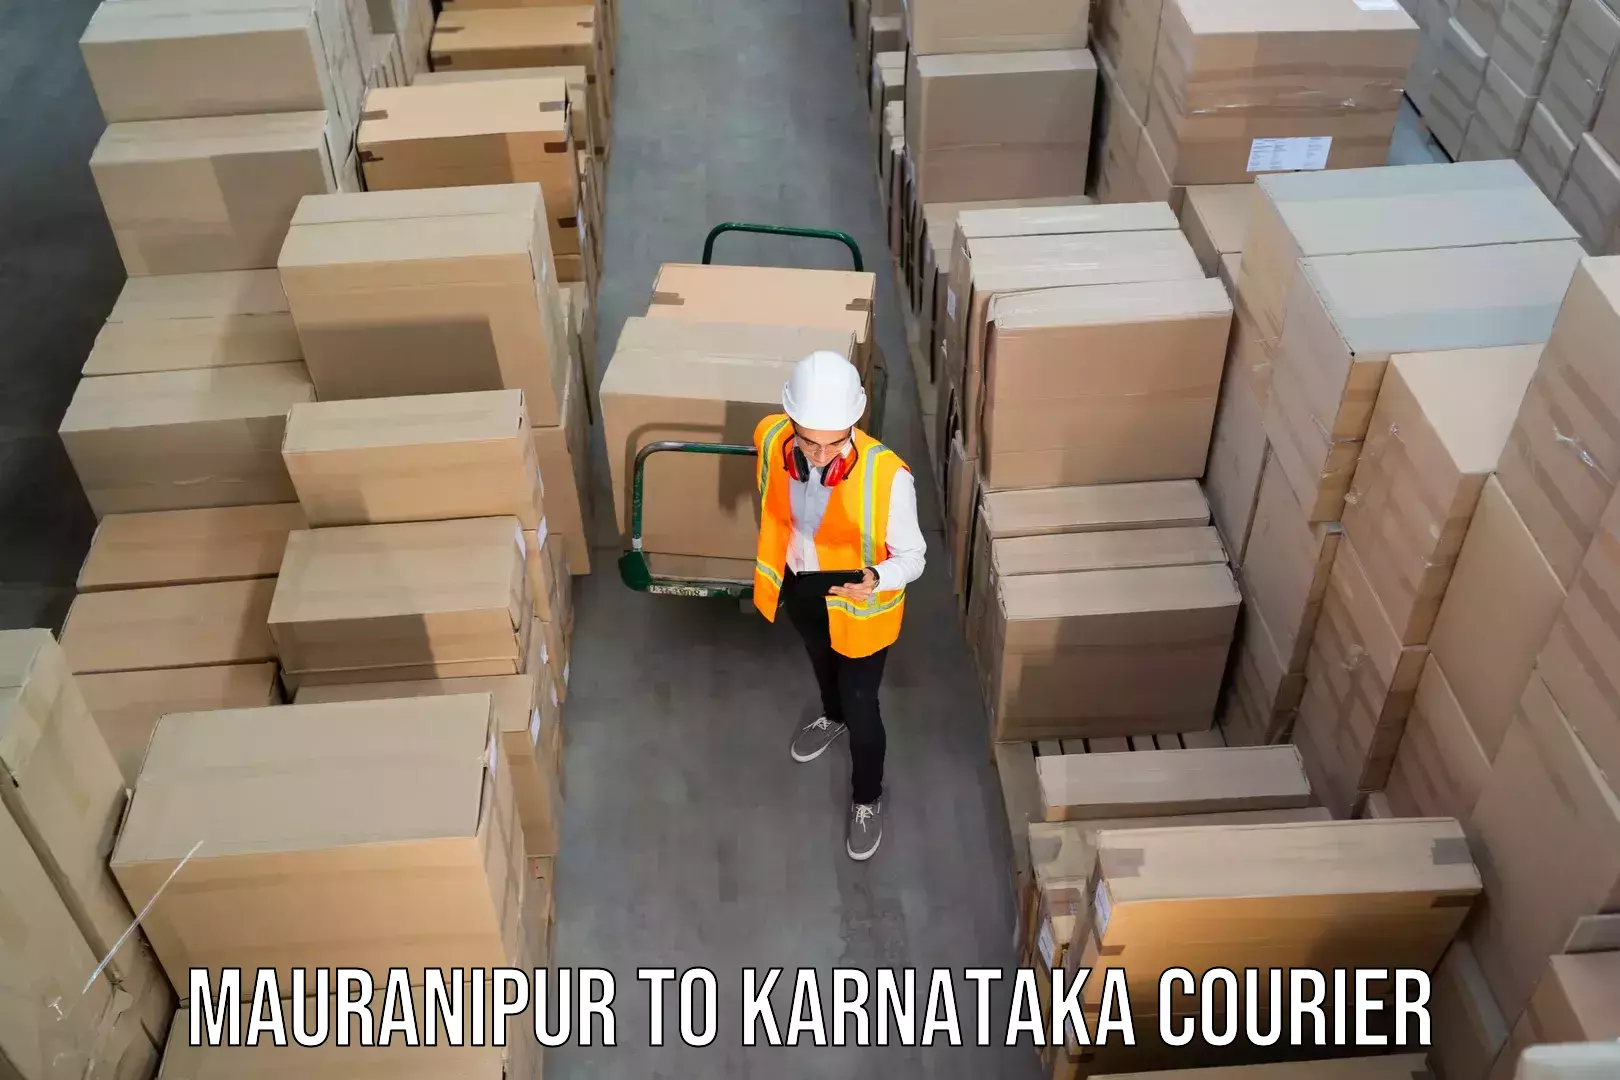 Advanced shipping network Mauranipur to Karnataka